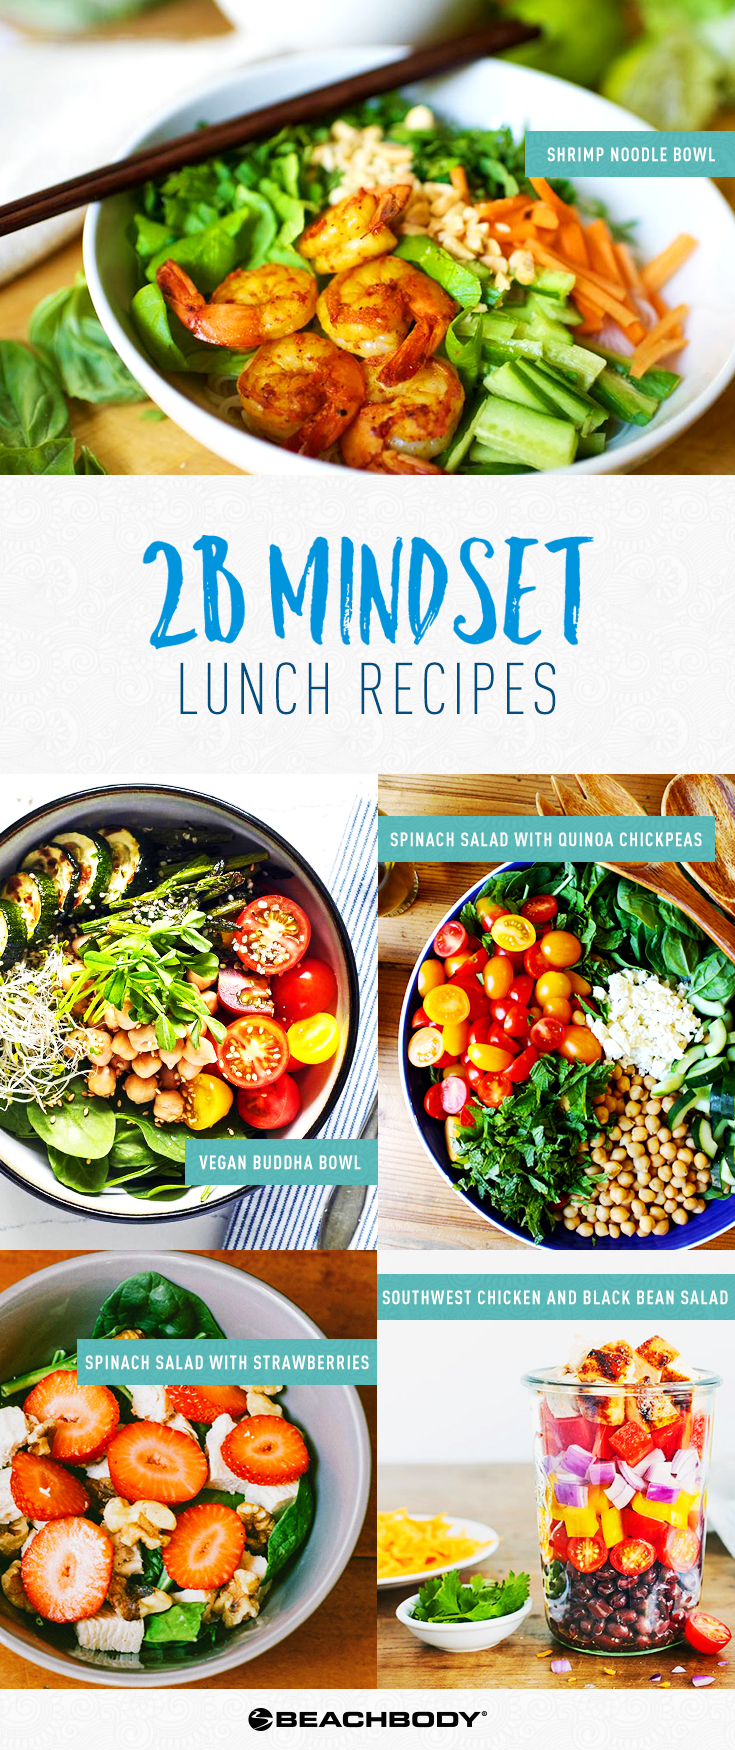 2B Mindset Lunch Recipes